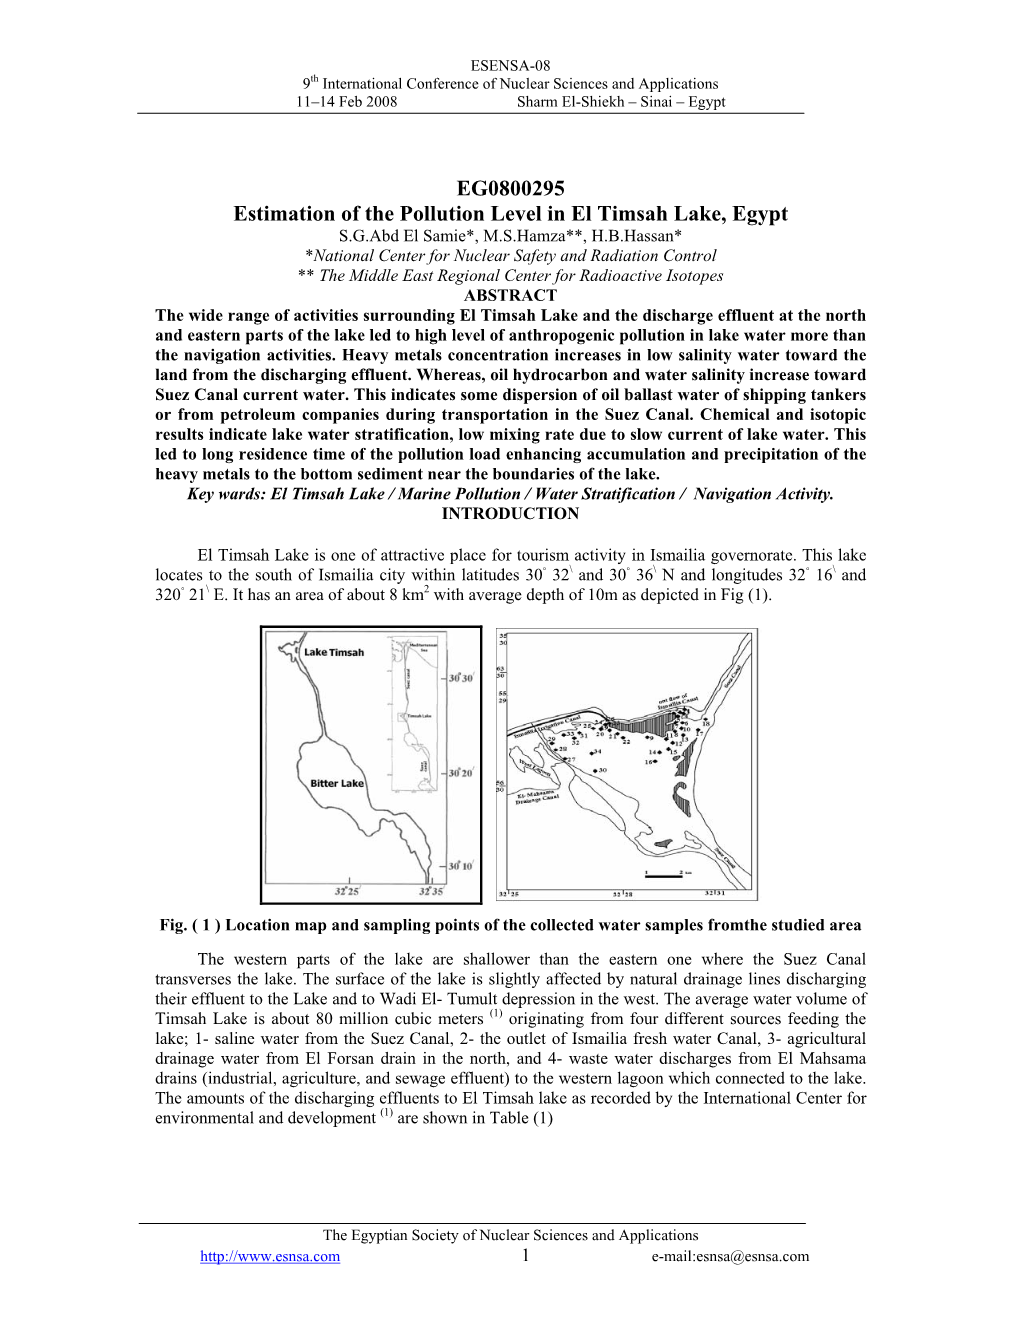 EG0800295 Estimation of the Pollution Level in El Timsah Lake, Egypt